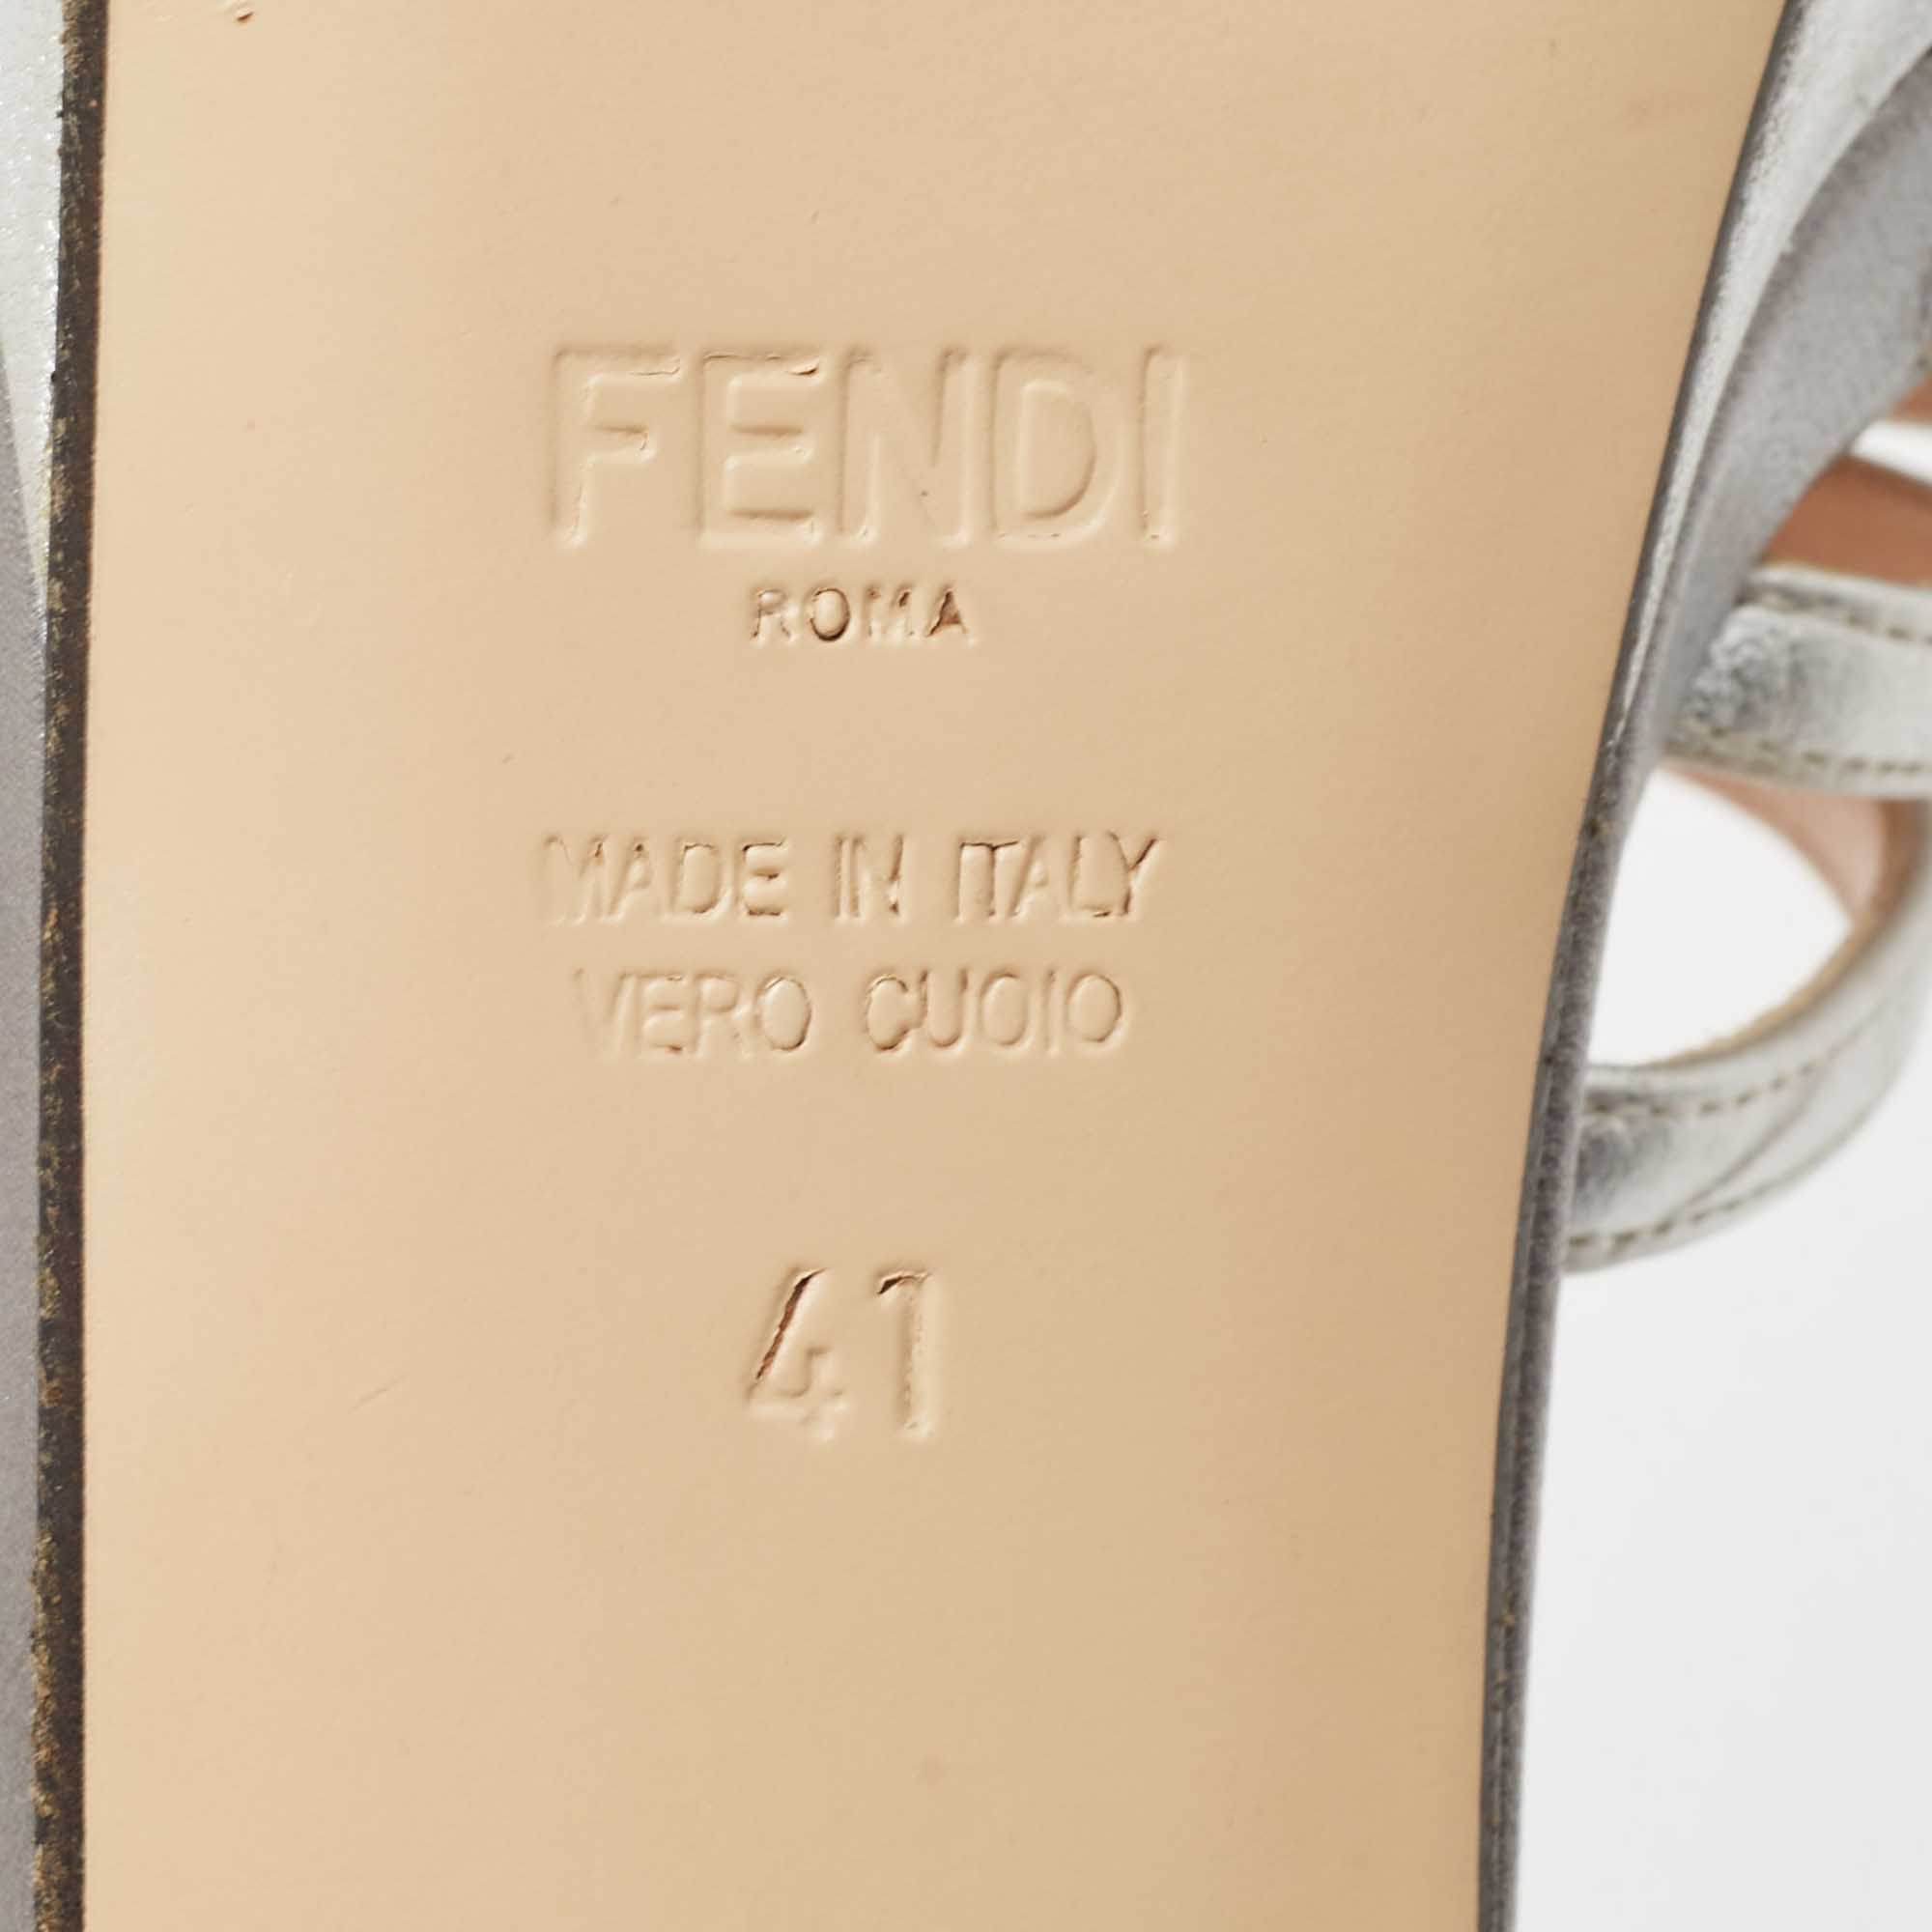 Fendi Silver Leather Strappy T Strap Platform Sandals Size 41